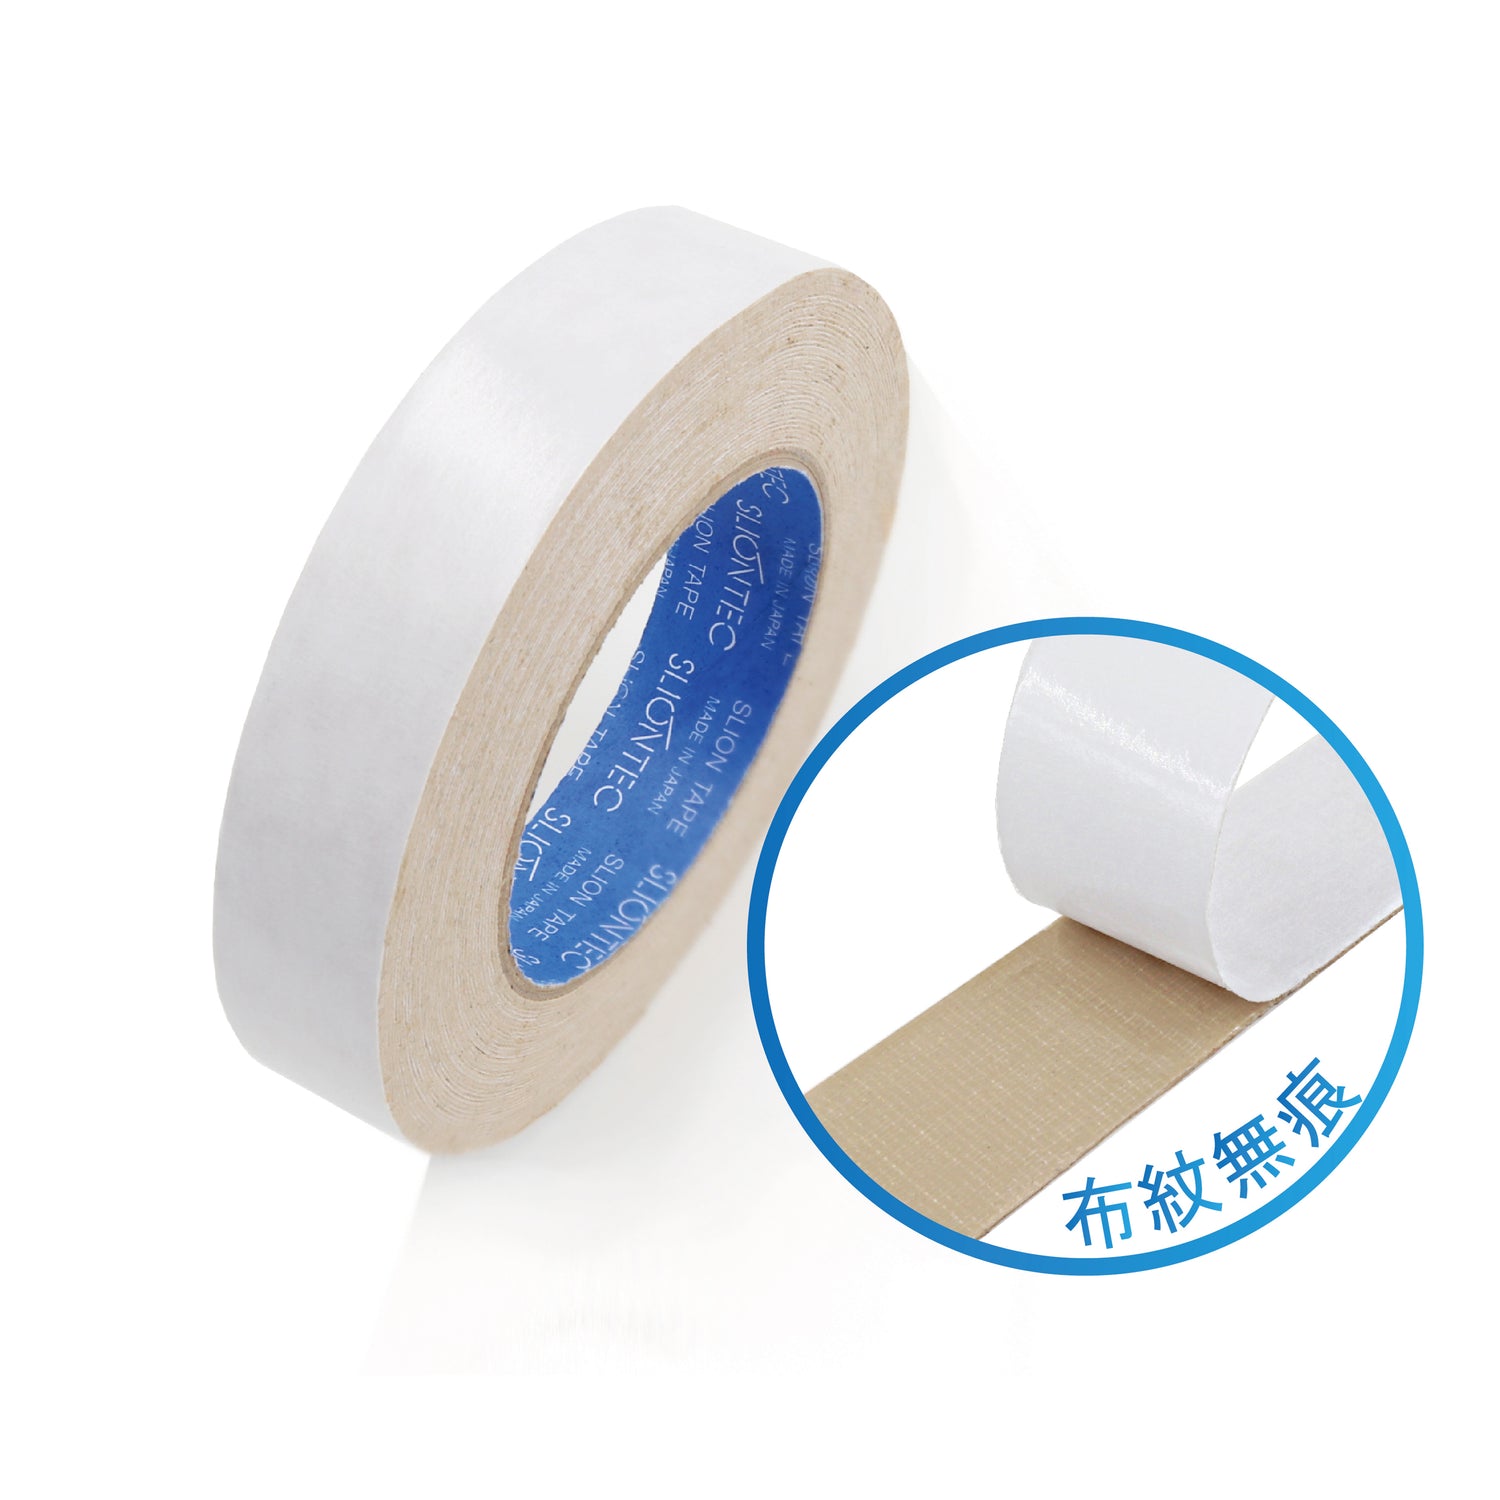 Sliontec Double Coated Cloth Adhesive Tape 日本無痕布紋強力雙面膠貼